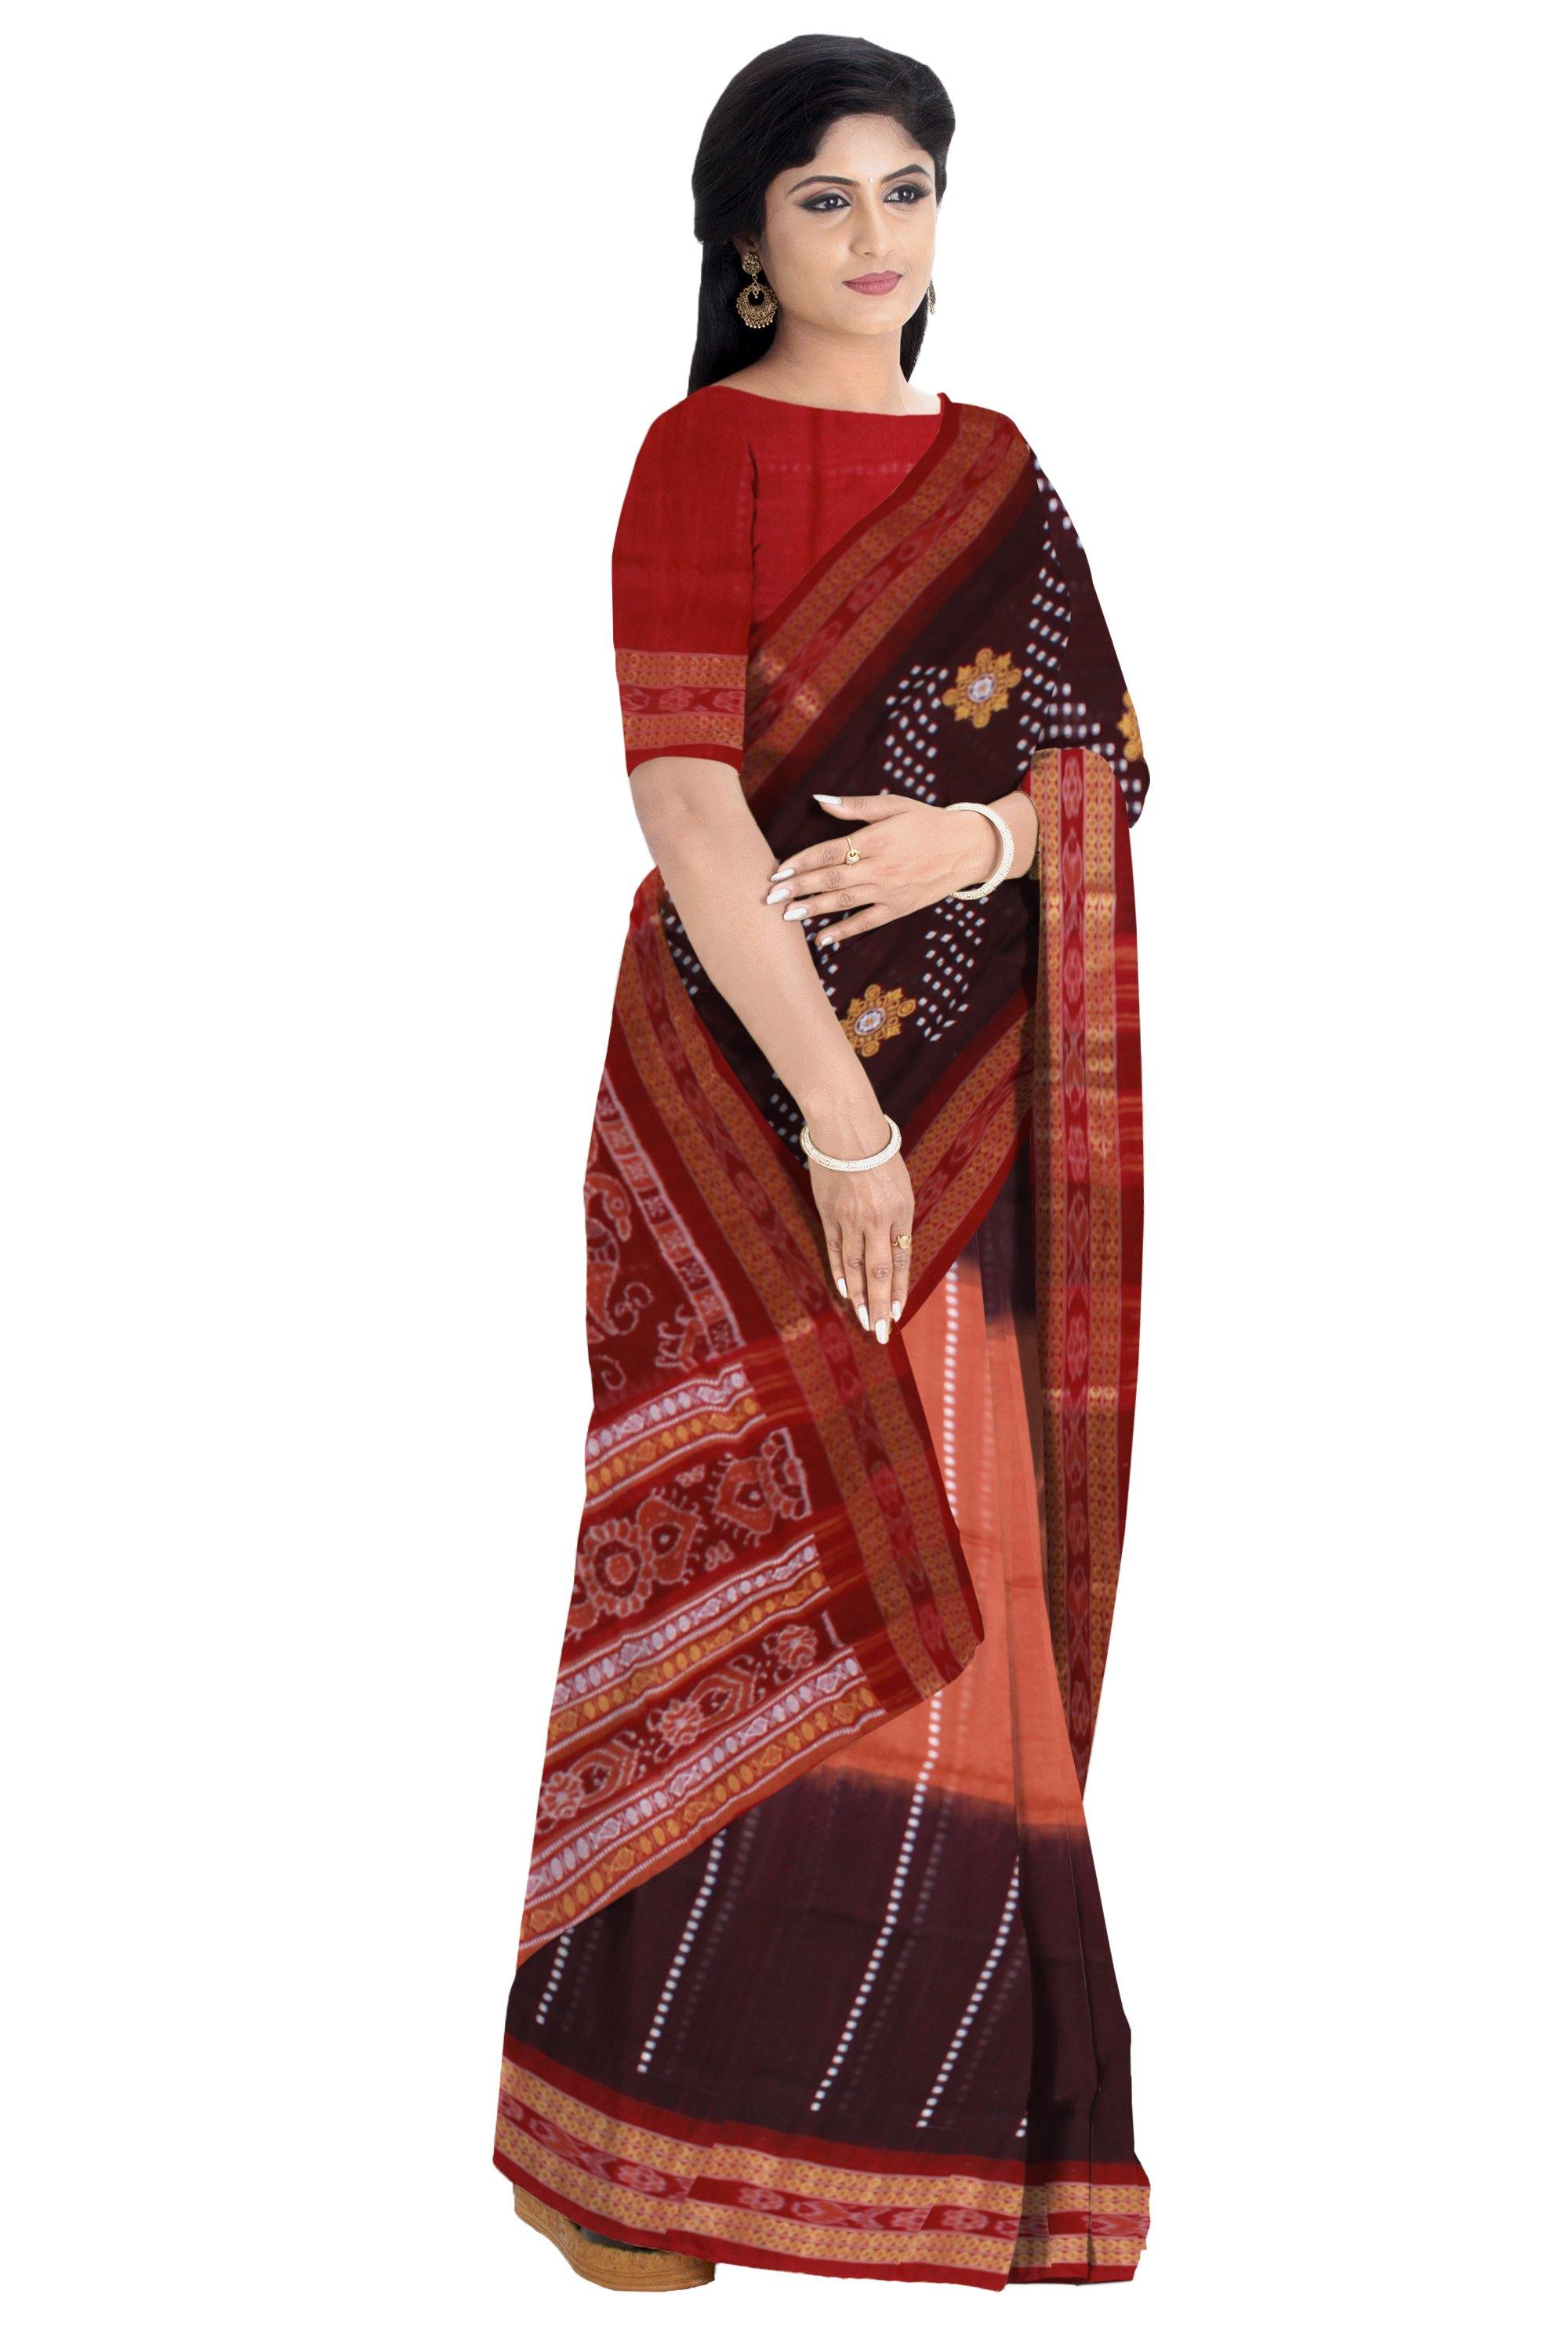 Exclusive Sambalpuri handwoven Bomkei pattern saree in Maroon and brown color. With blouse piece. - Koshali Arts & Crafts Enterprise